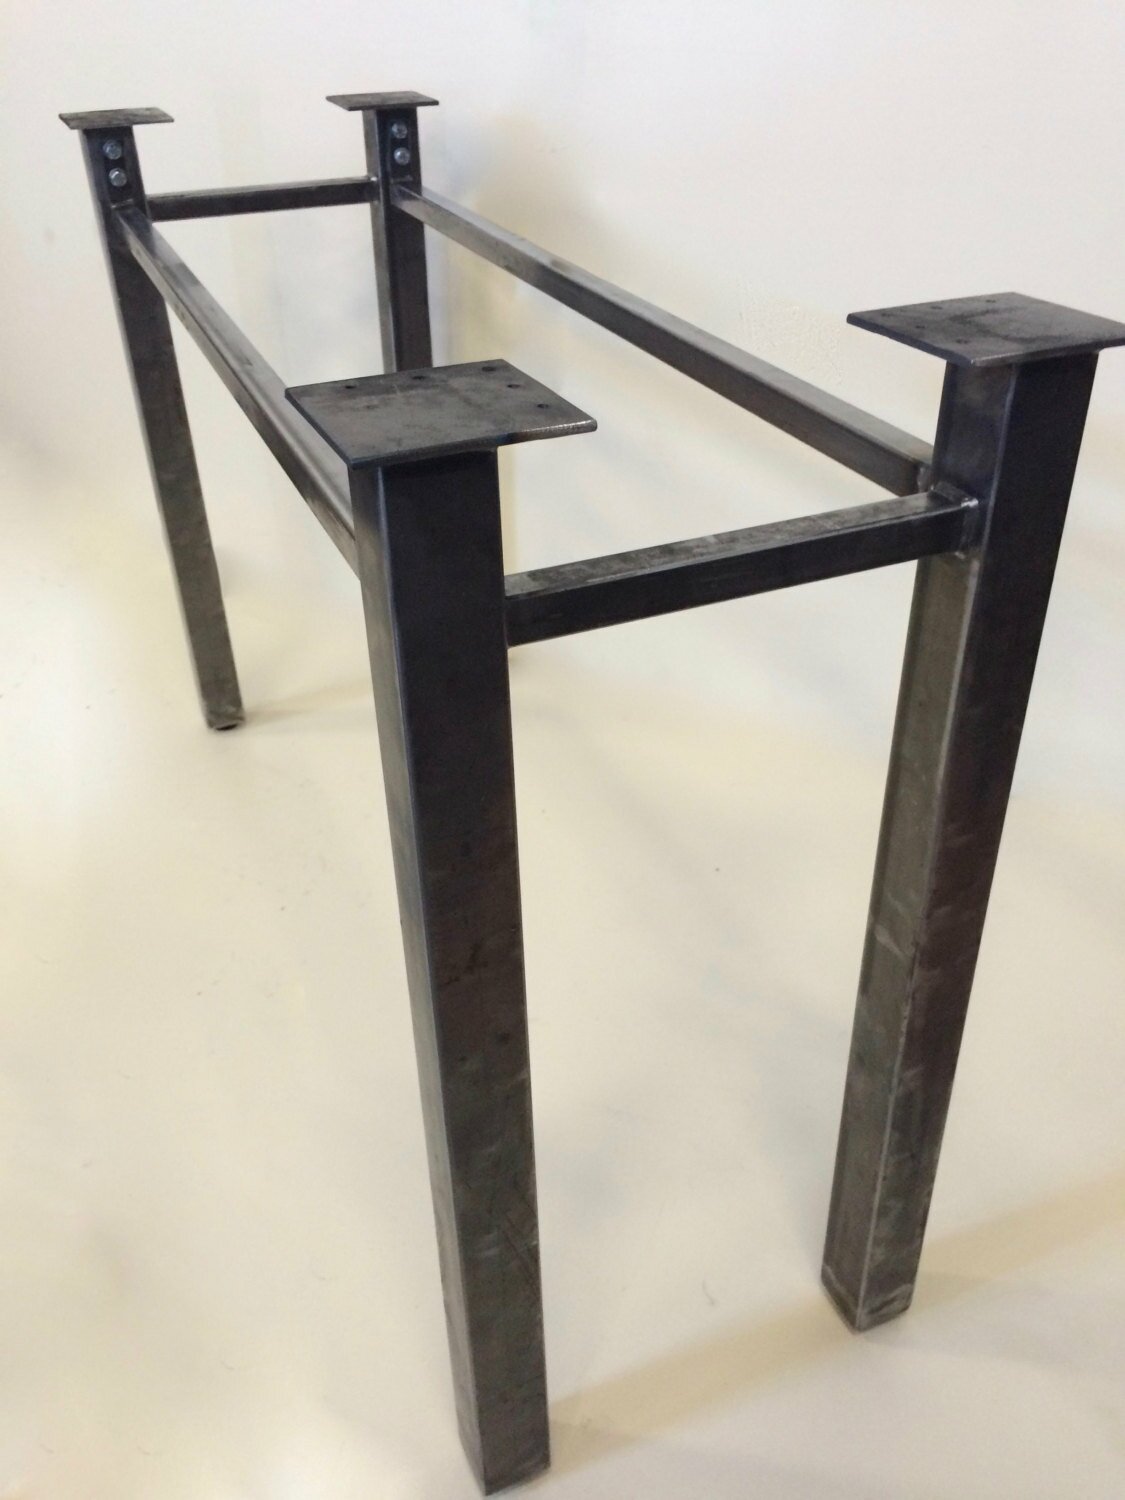 Work Bench Legs for Best Your Workspace Furniture Design: Work Bench Legs | Workbench Frame Kits | Legs For Workbench